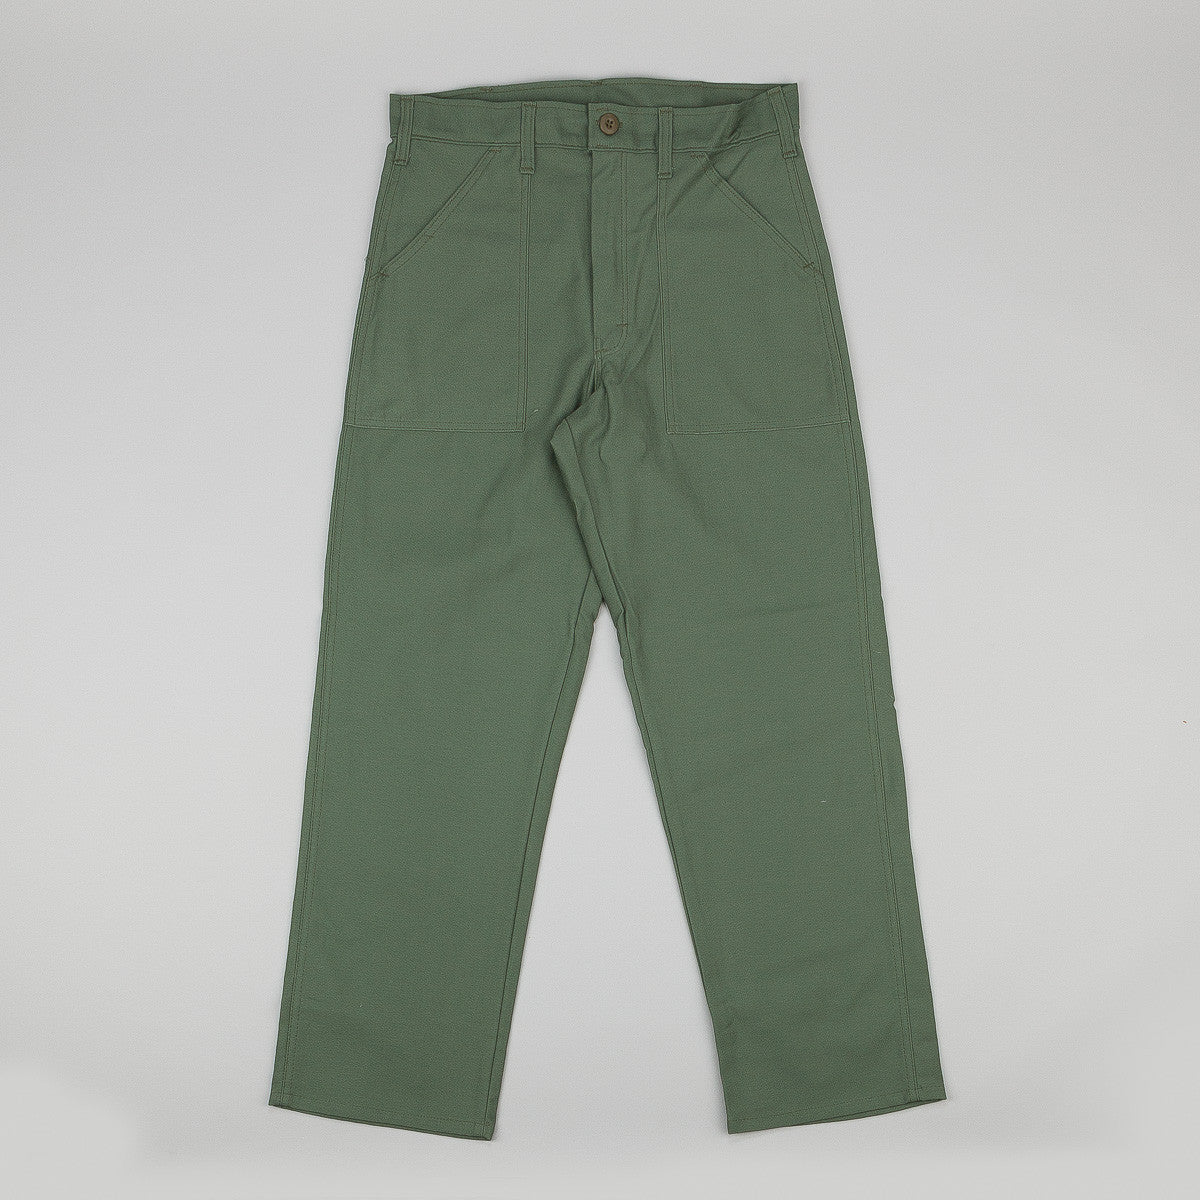 Stan Ray Original 107 4 Pocket Fatigue Trousers - Green | Flatspot